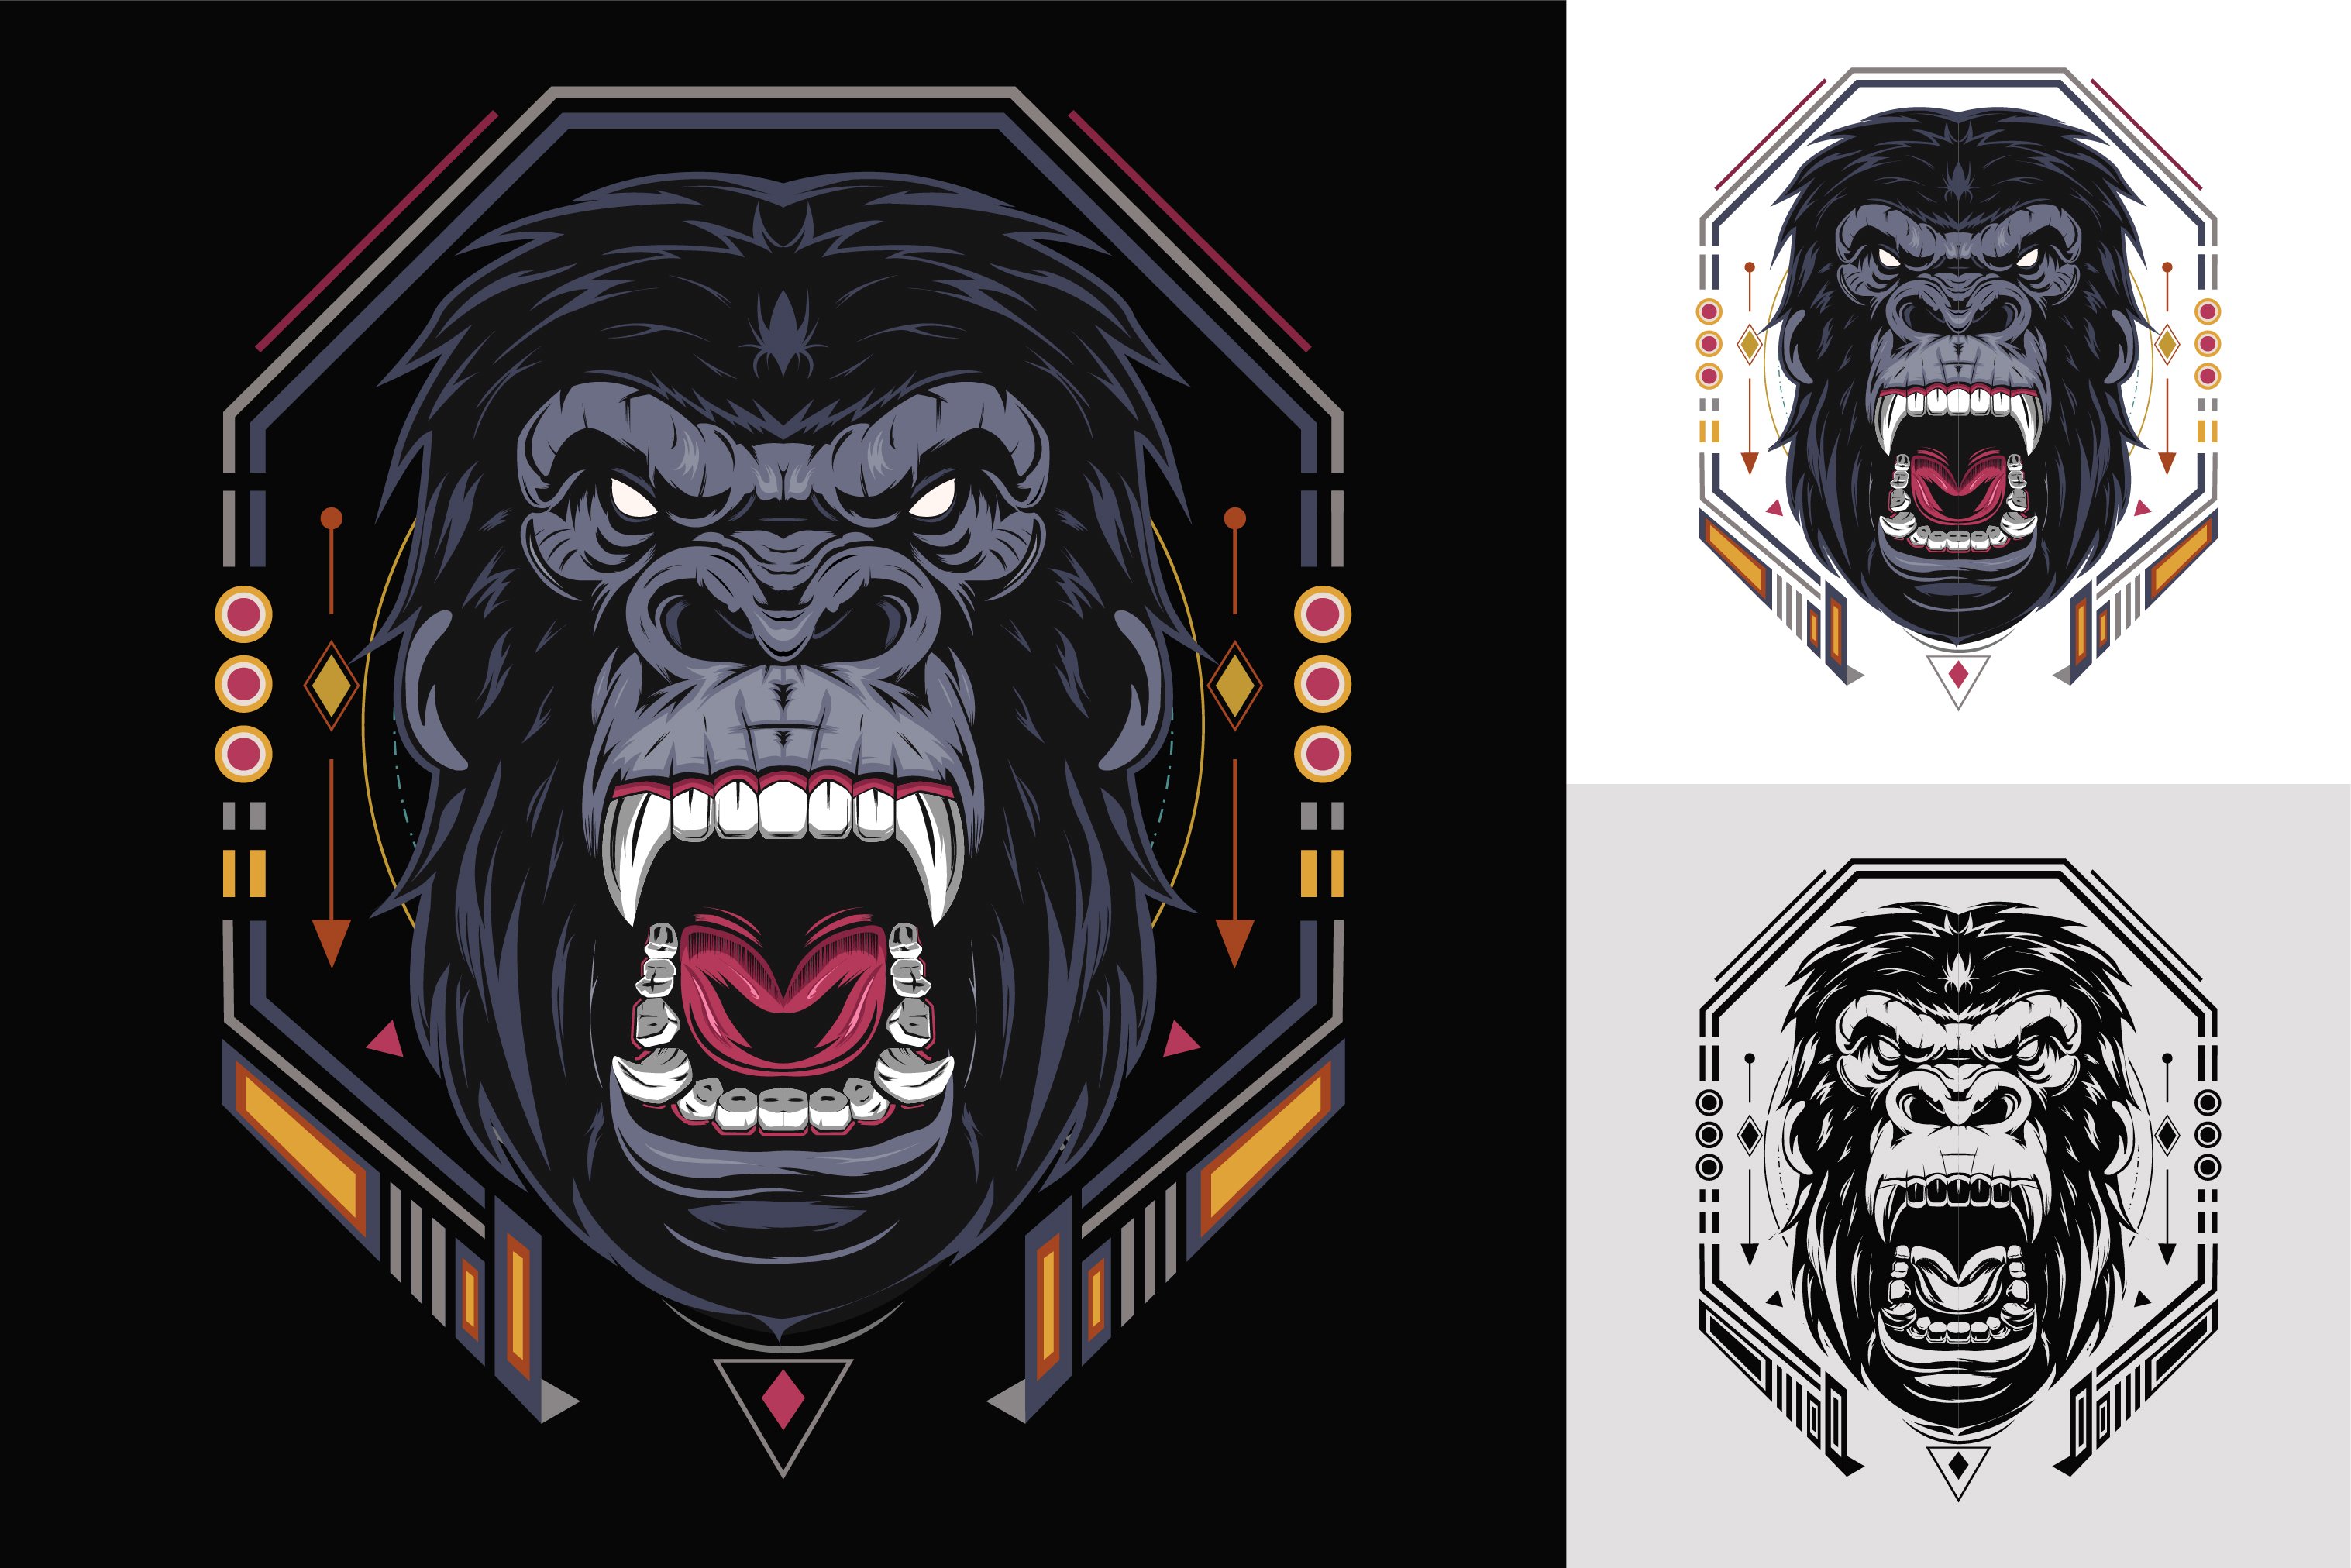 Mad gorilla emblem cover image.